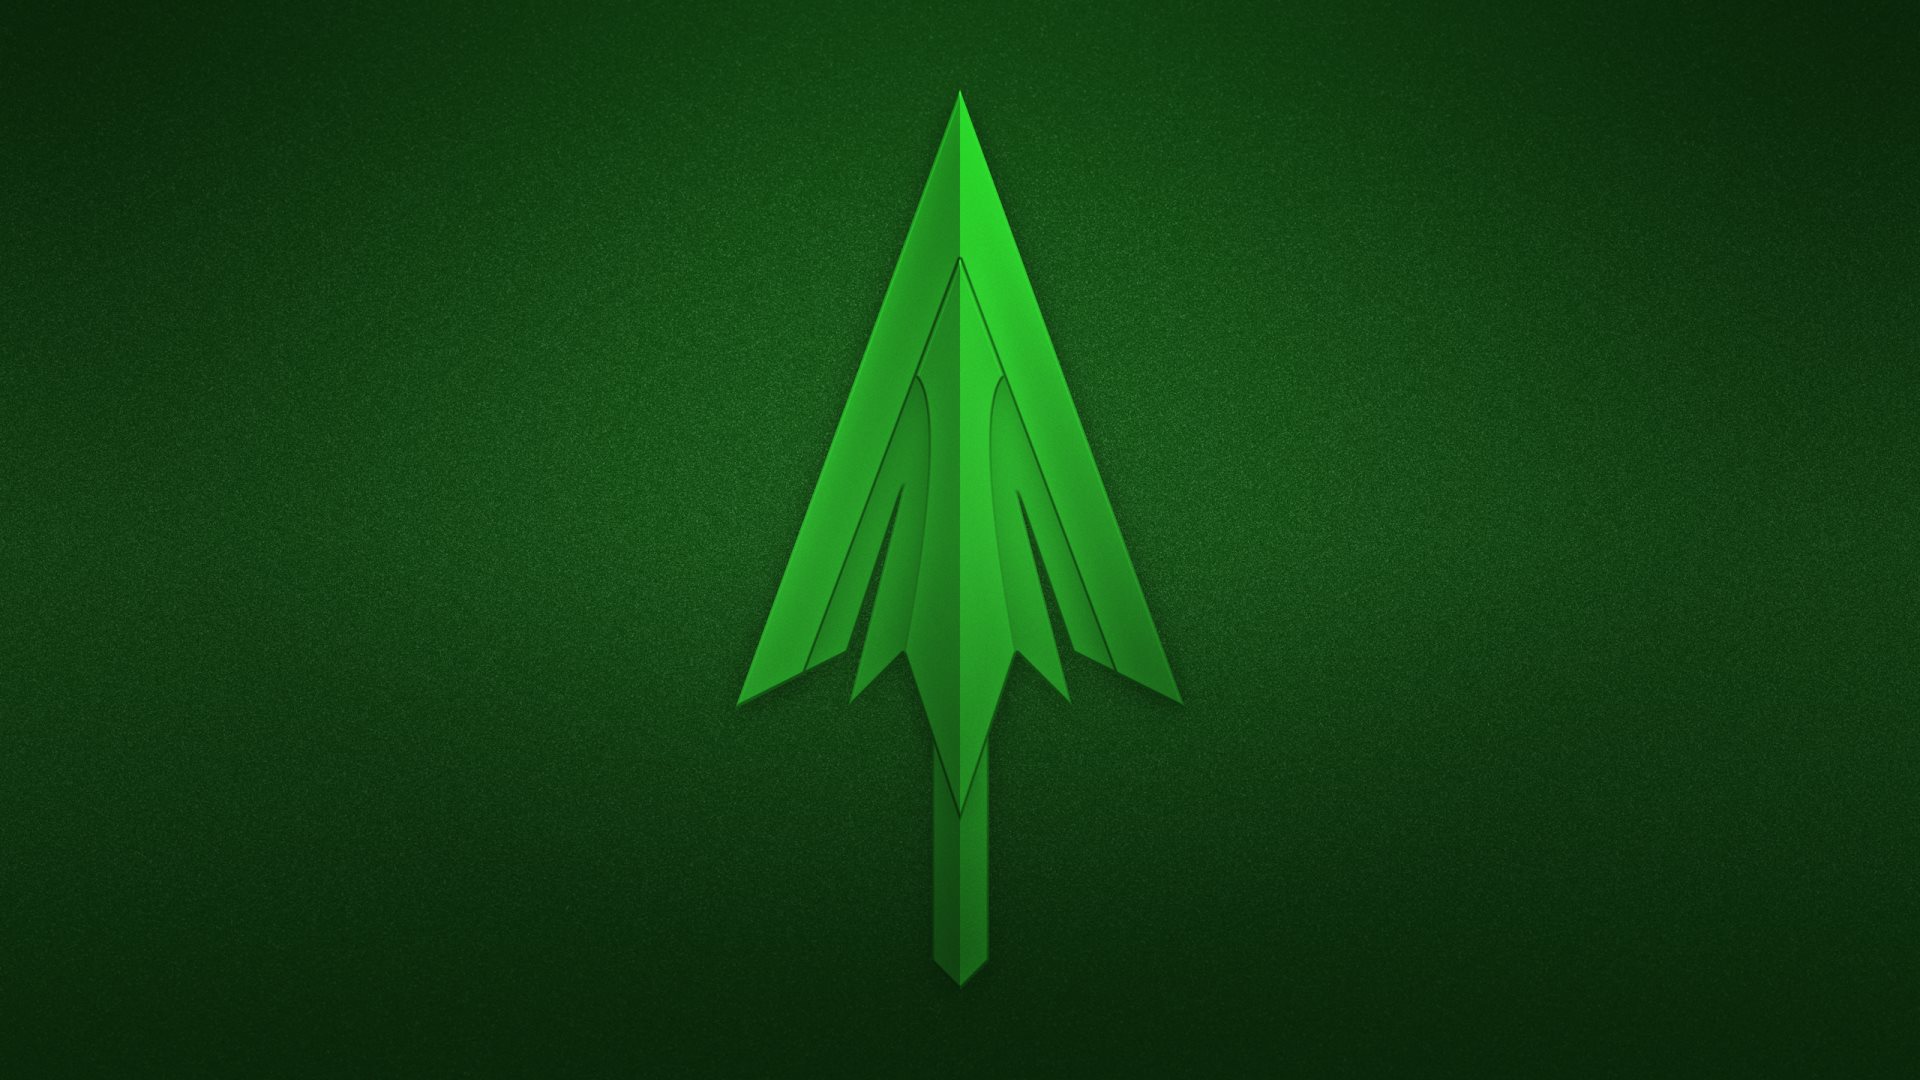 Green Arrow Logo Wallpaper Green arrow